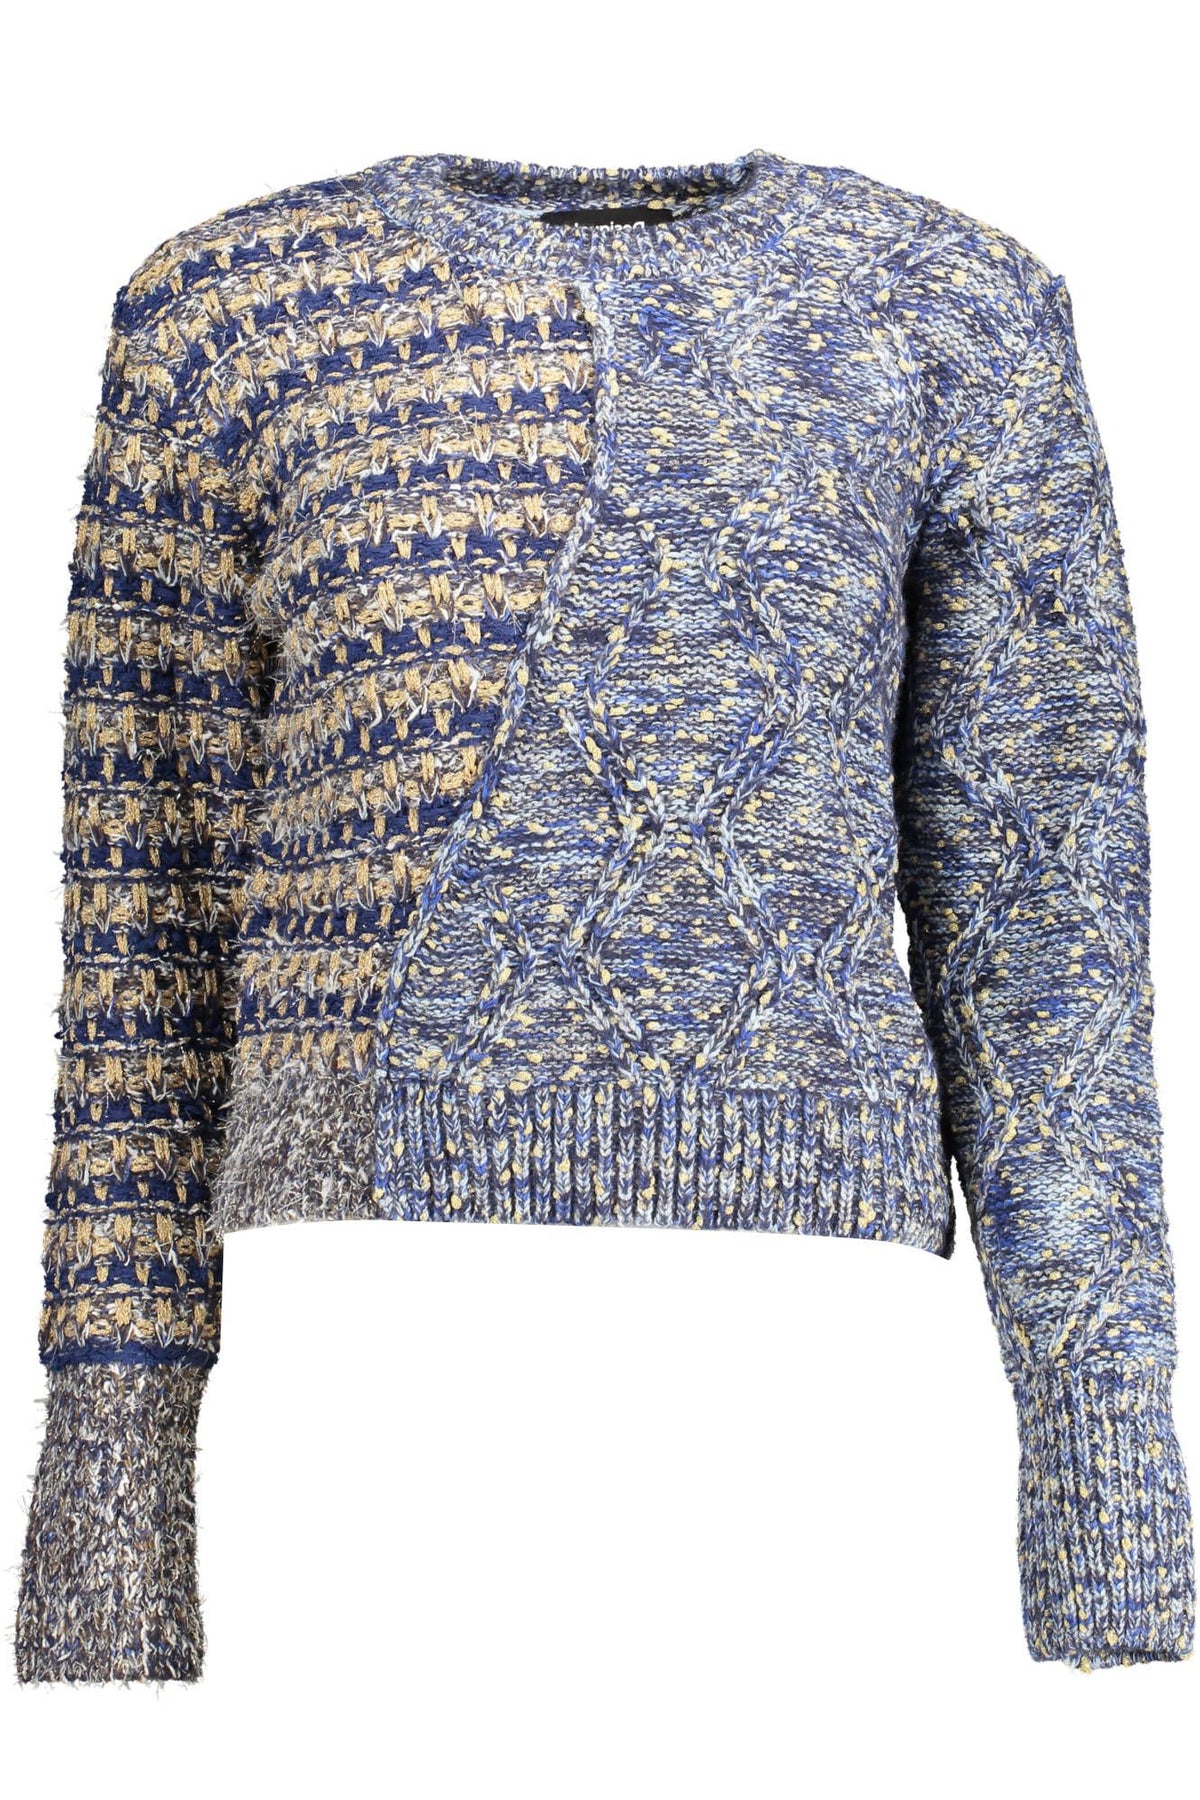 Desigual – Eclectic – Pullover mit Kontrastdetails in Blau